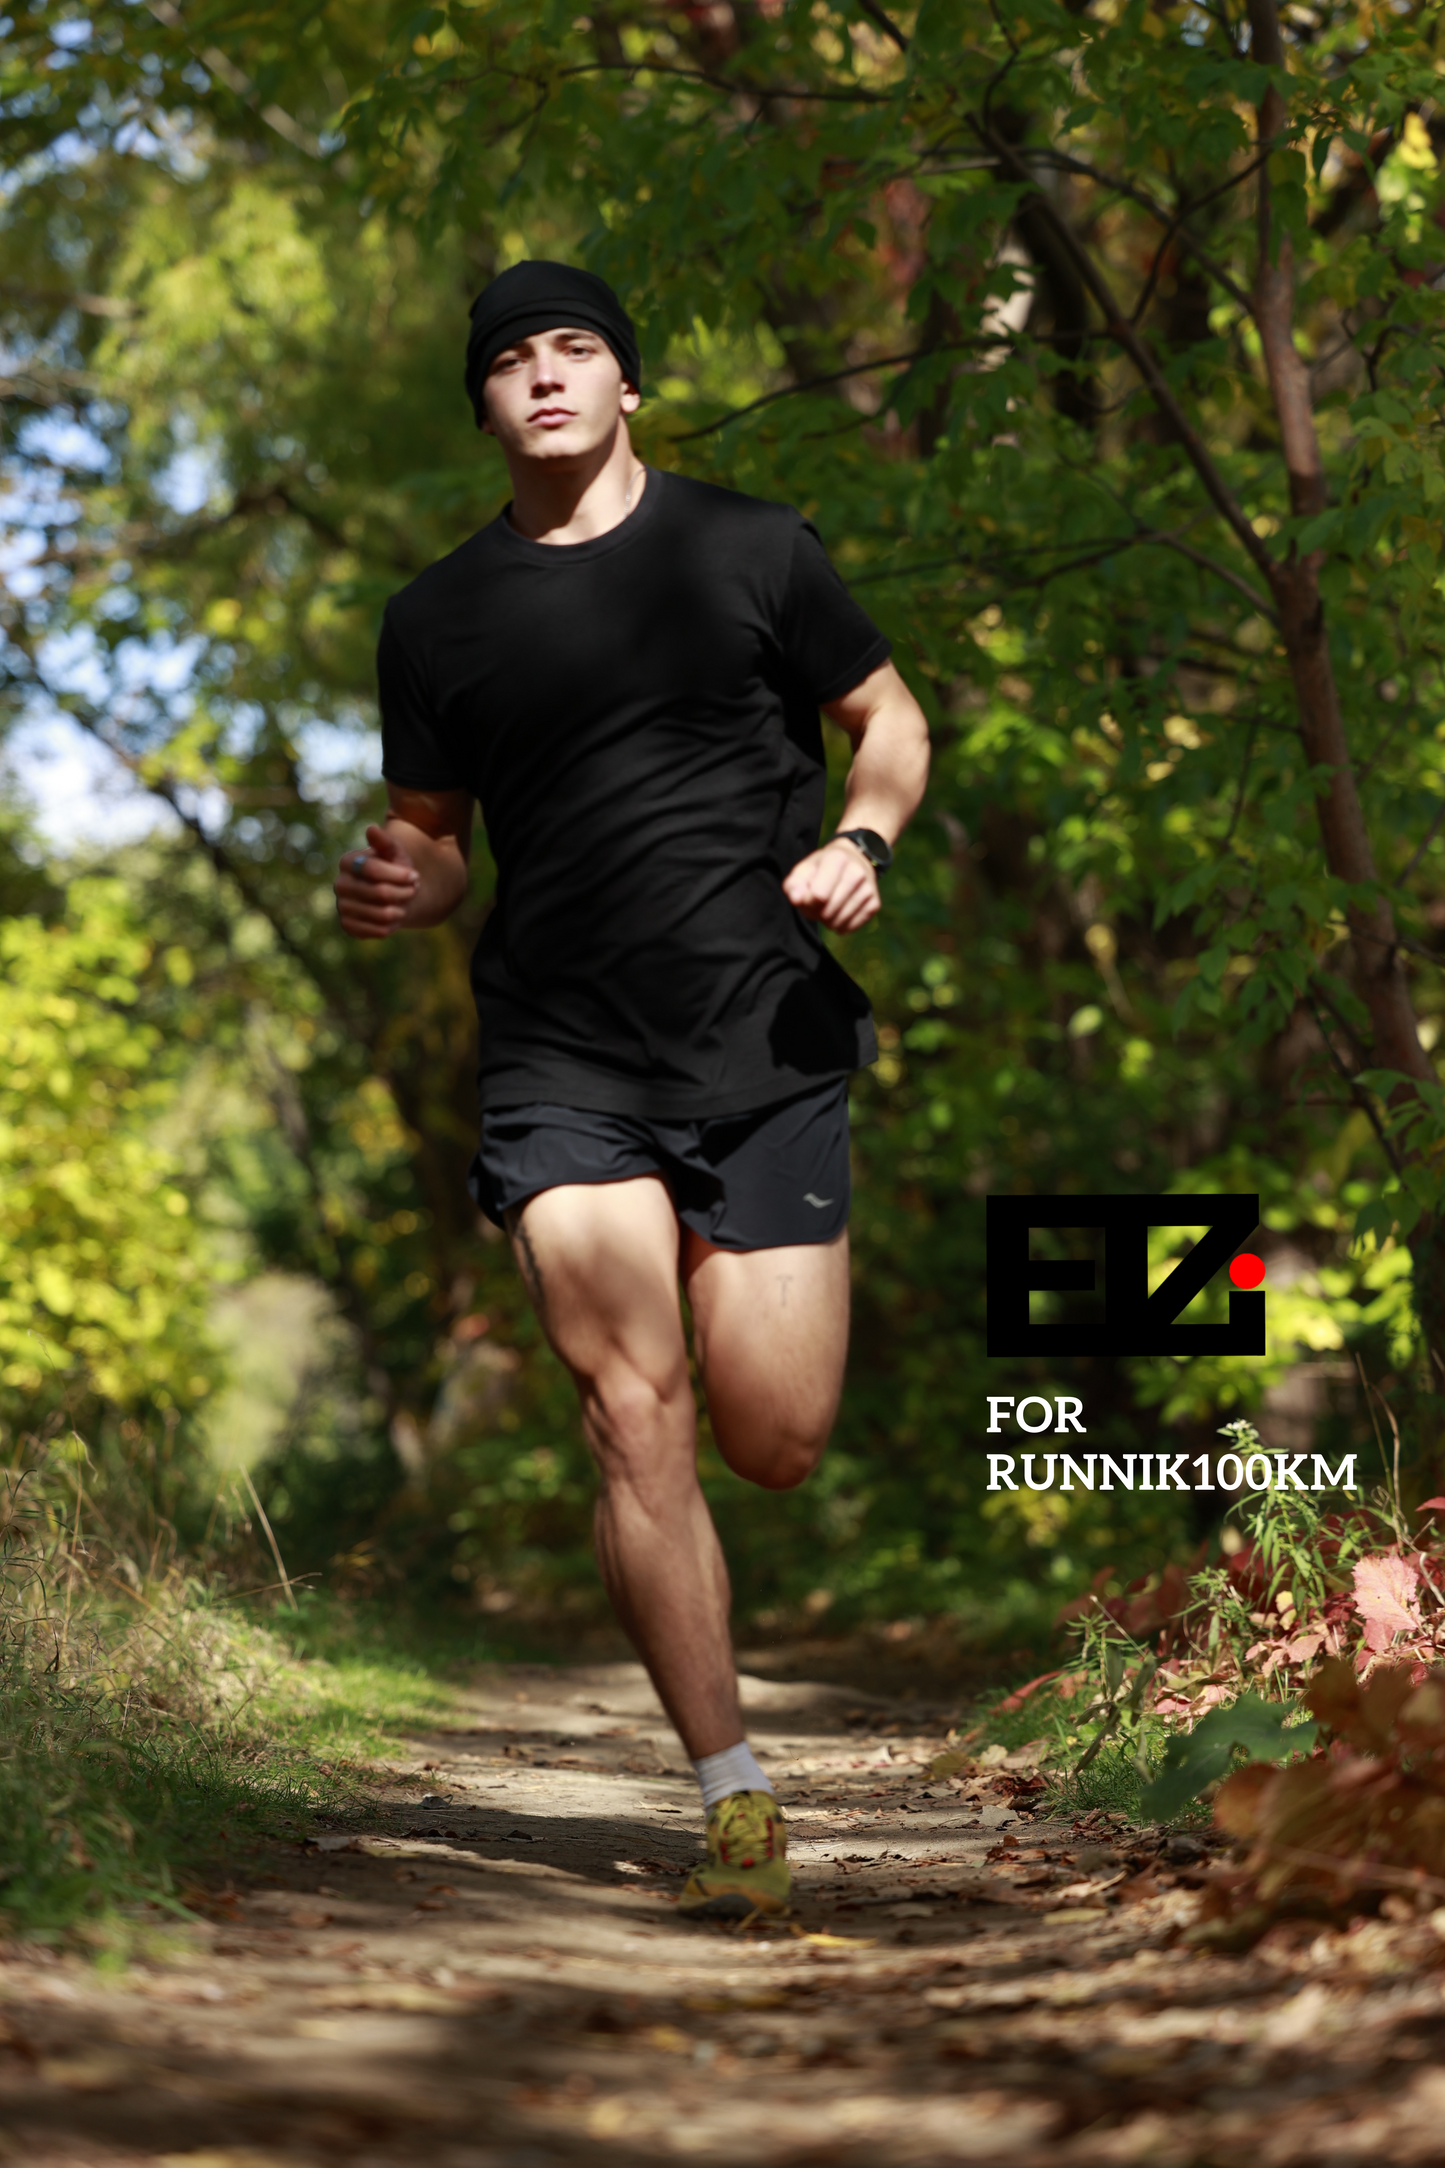 runnik100km Black Wool T-shirt and runners hat by ELZI.ca. 